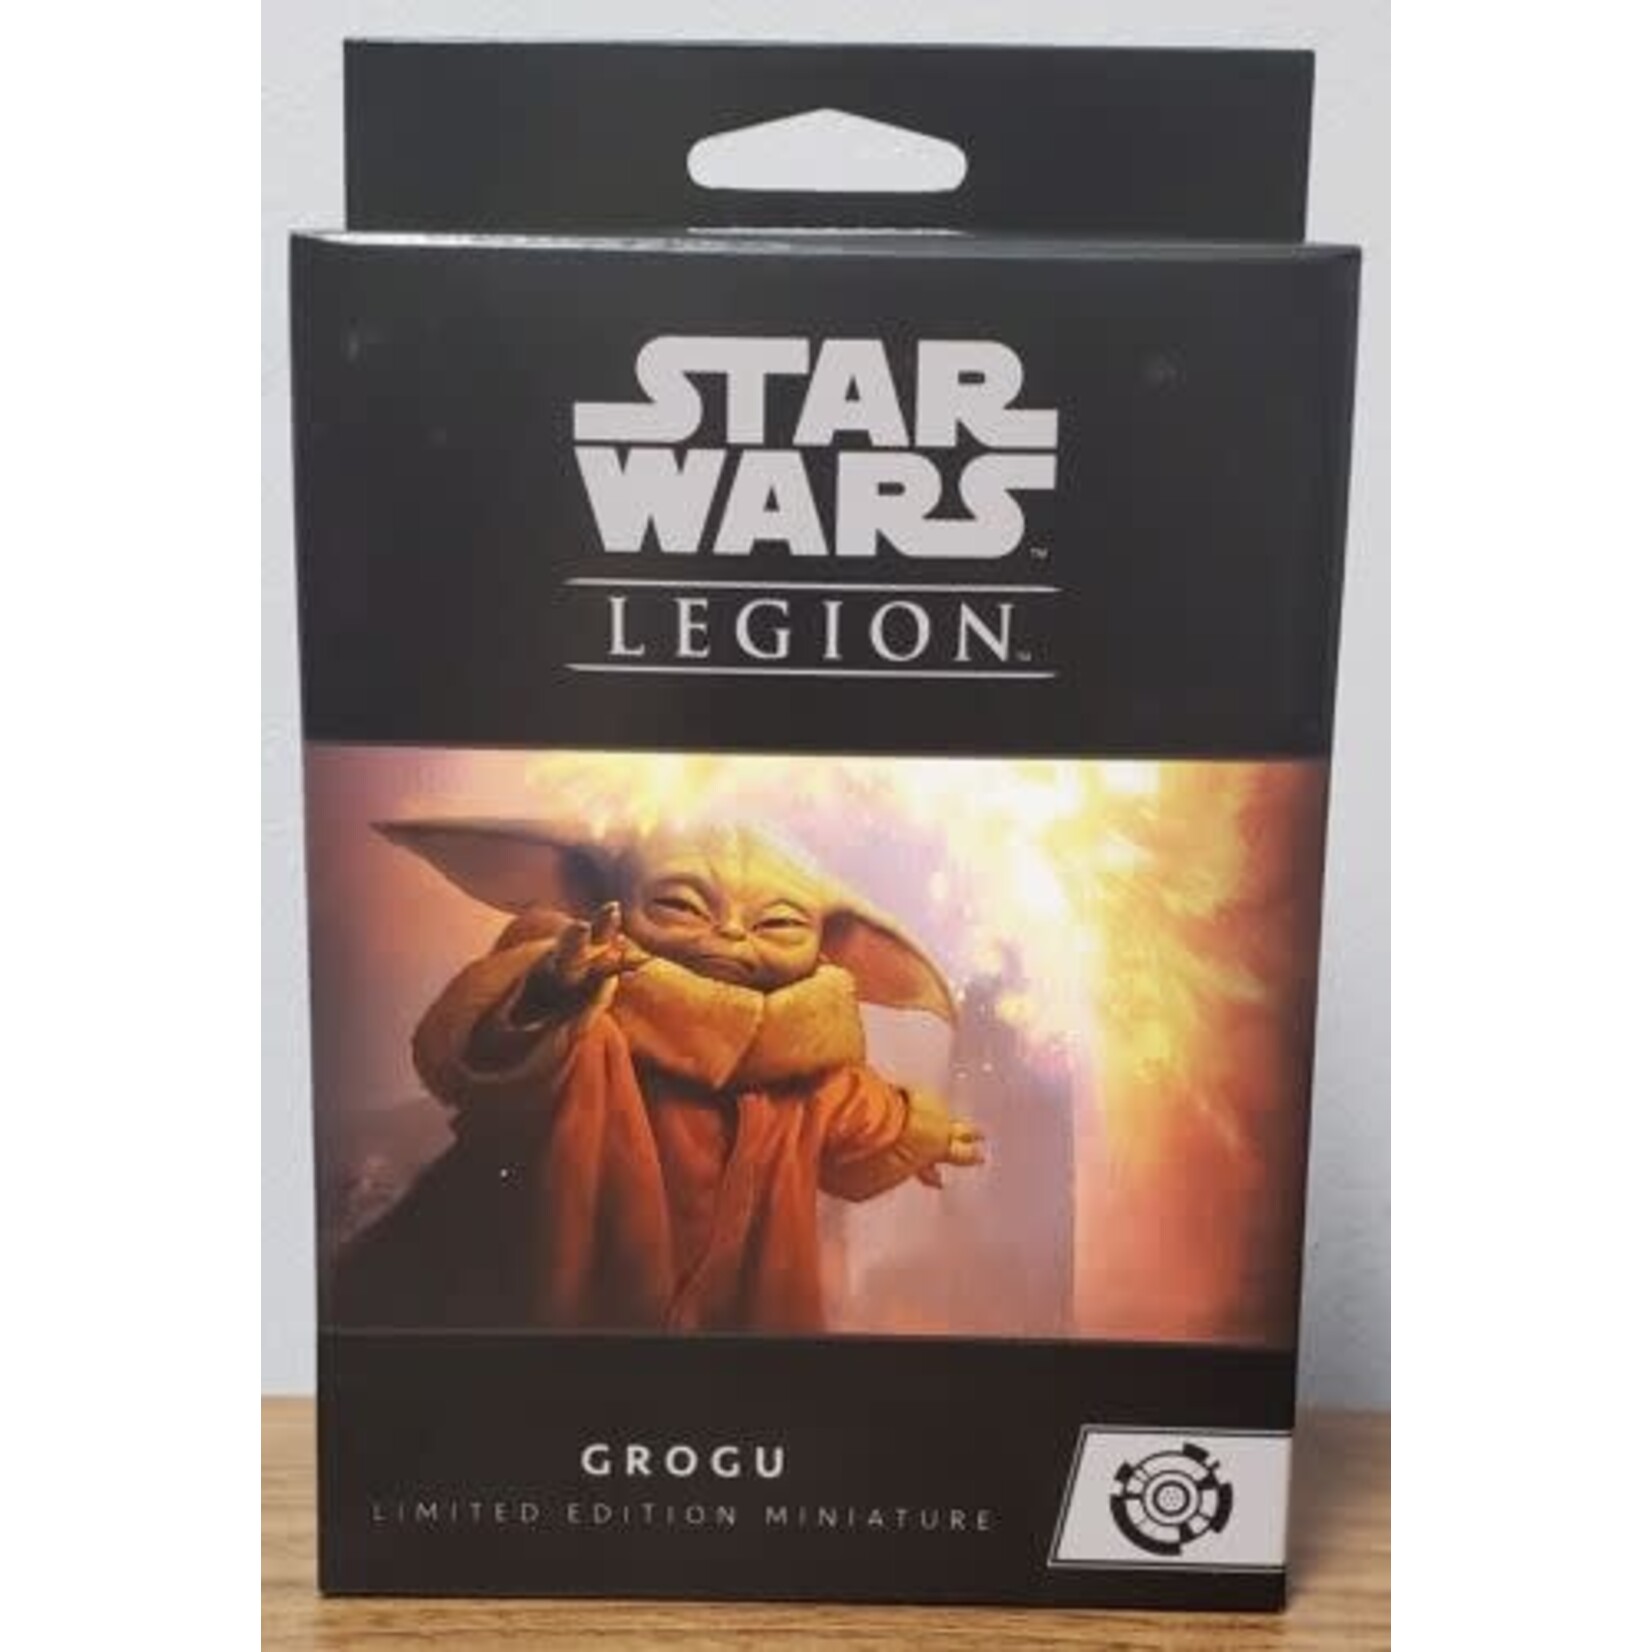 The Child - Star Wars Legion Grogu Limited Edition Miniature Promotion